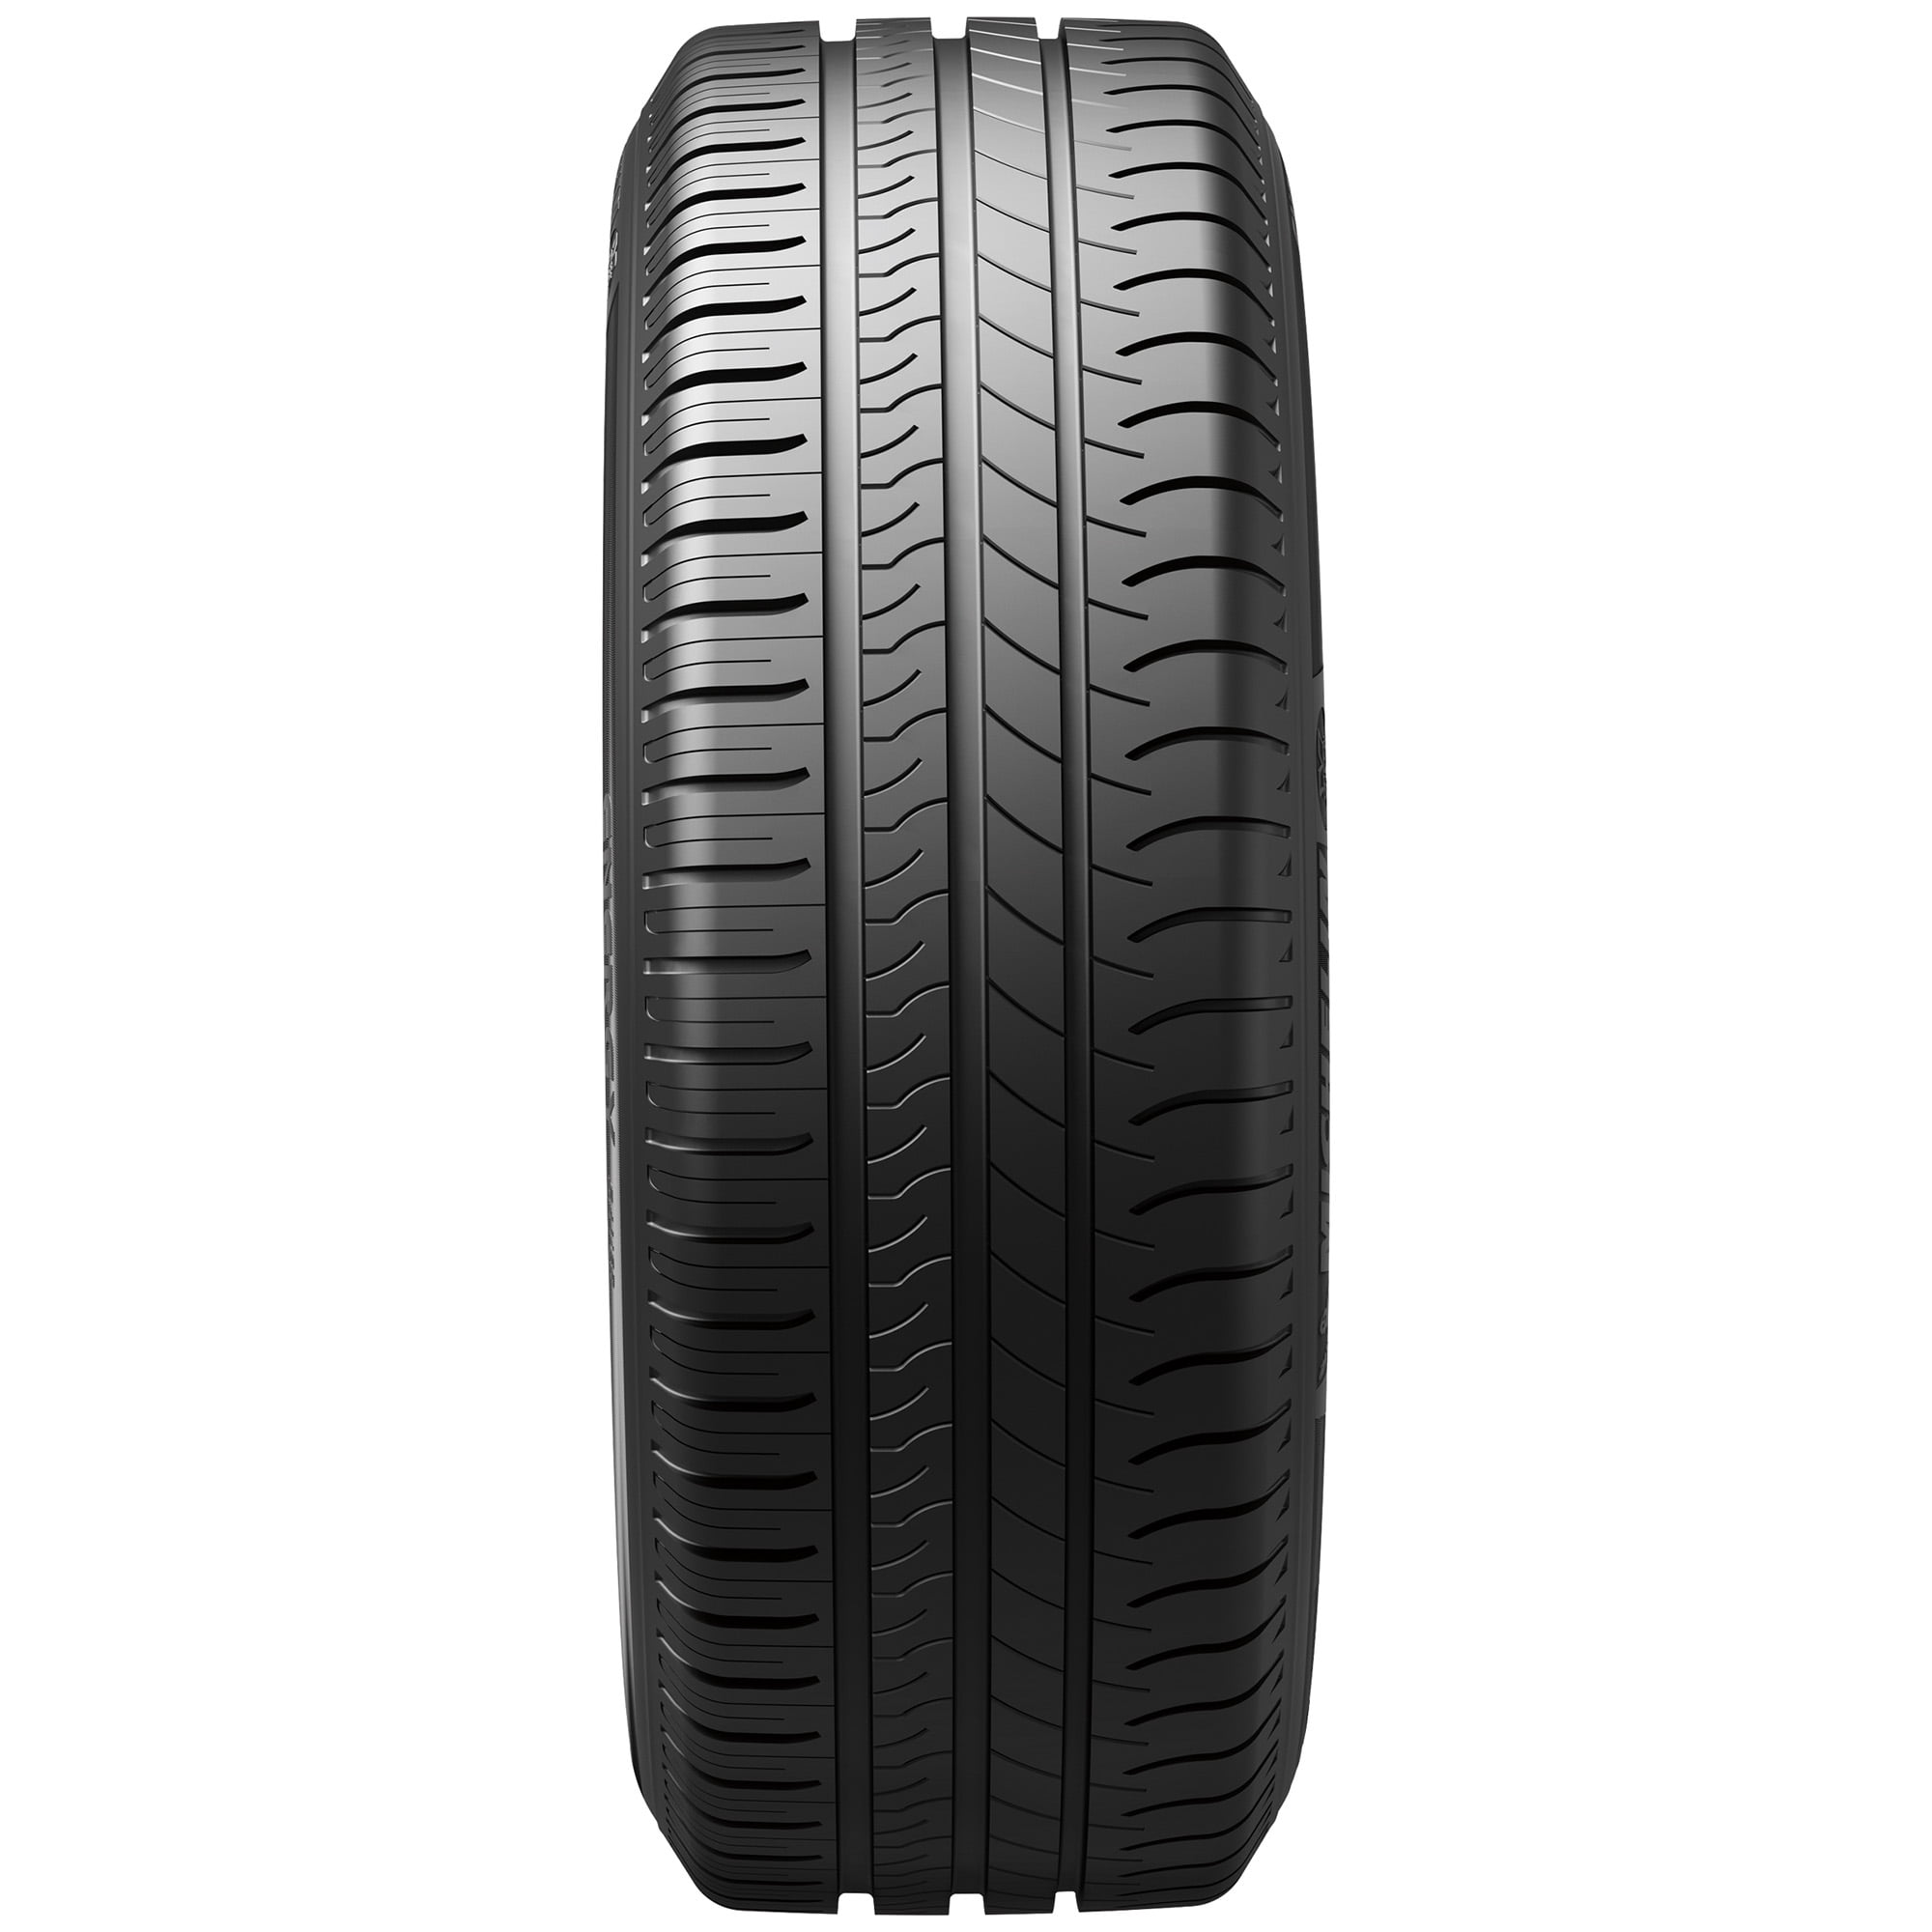 Michelin Energy Saver All-Season 195/60R16 89V Tire